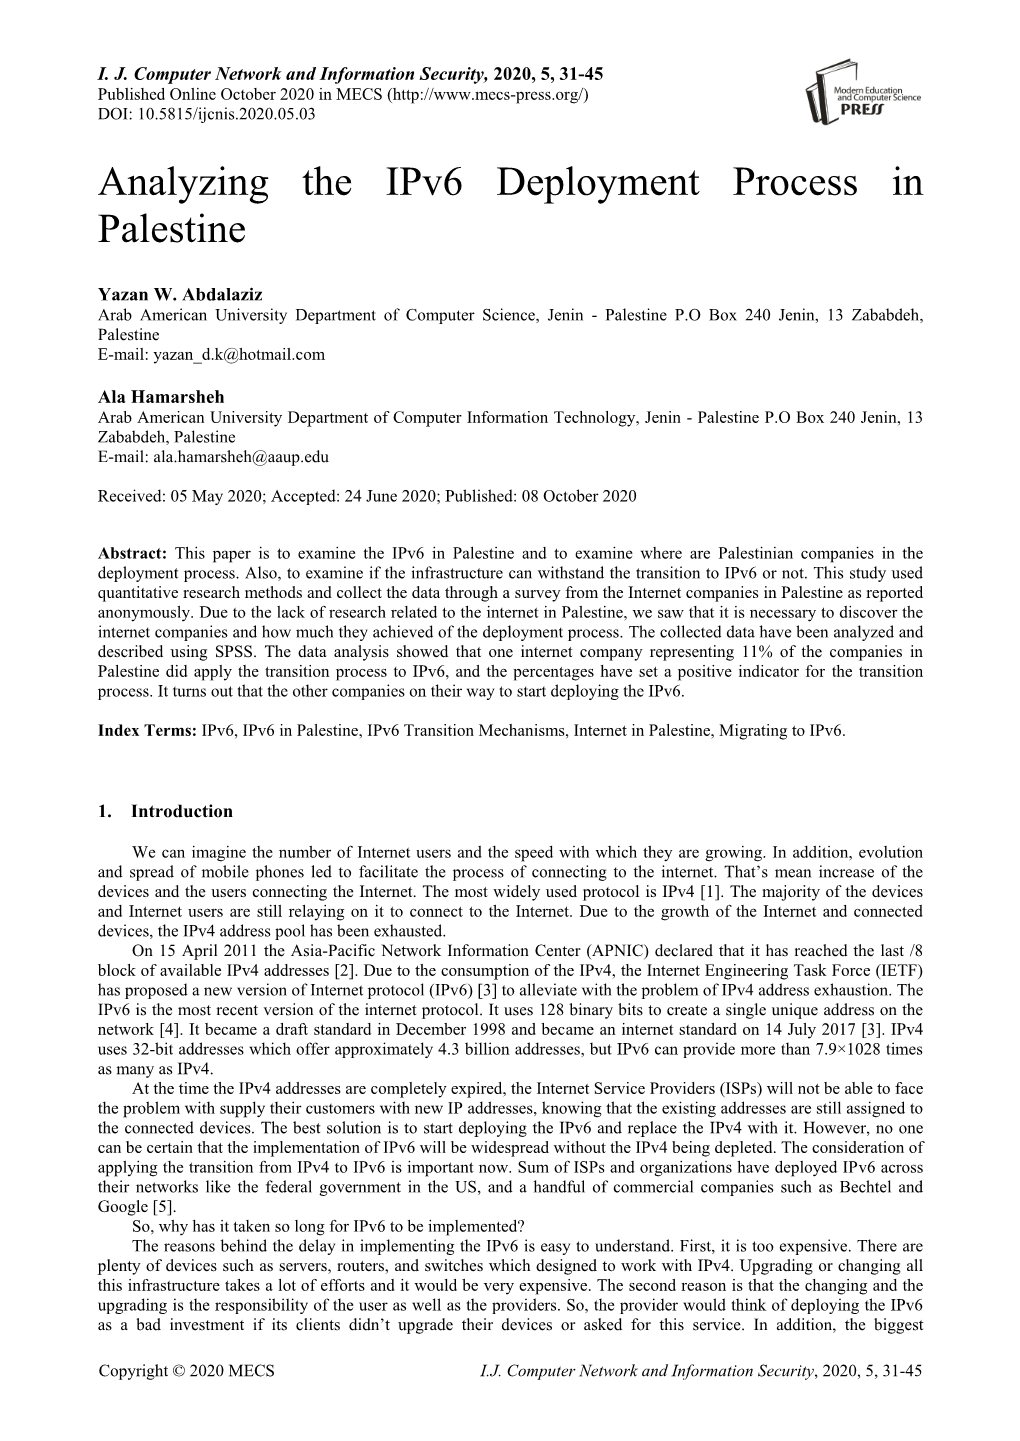 Analyzing the Ipv6 Deployment Process in Palestine